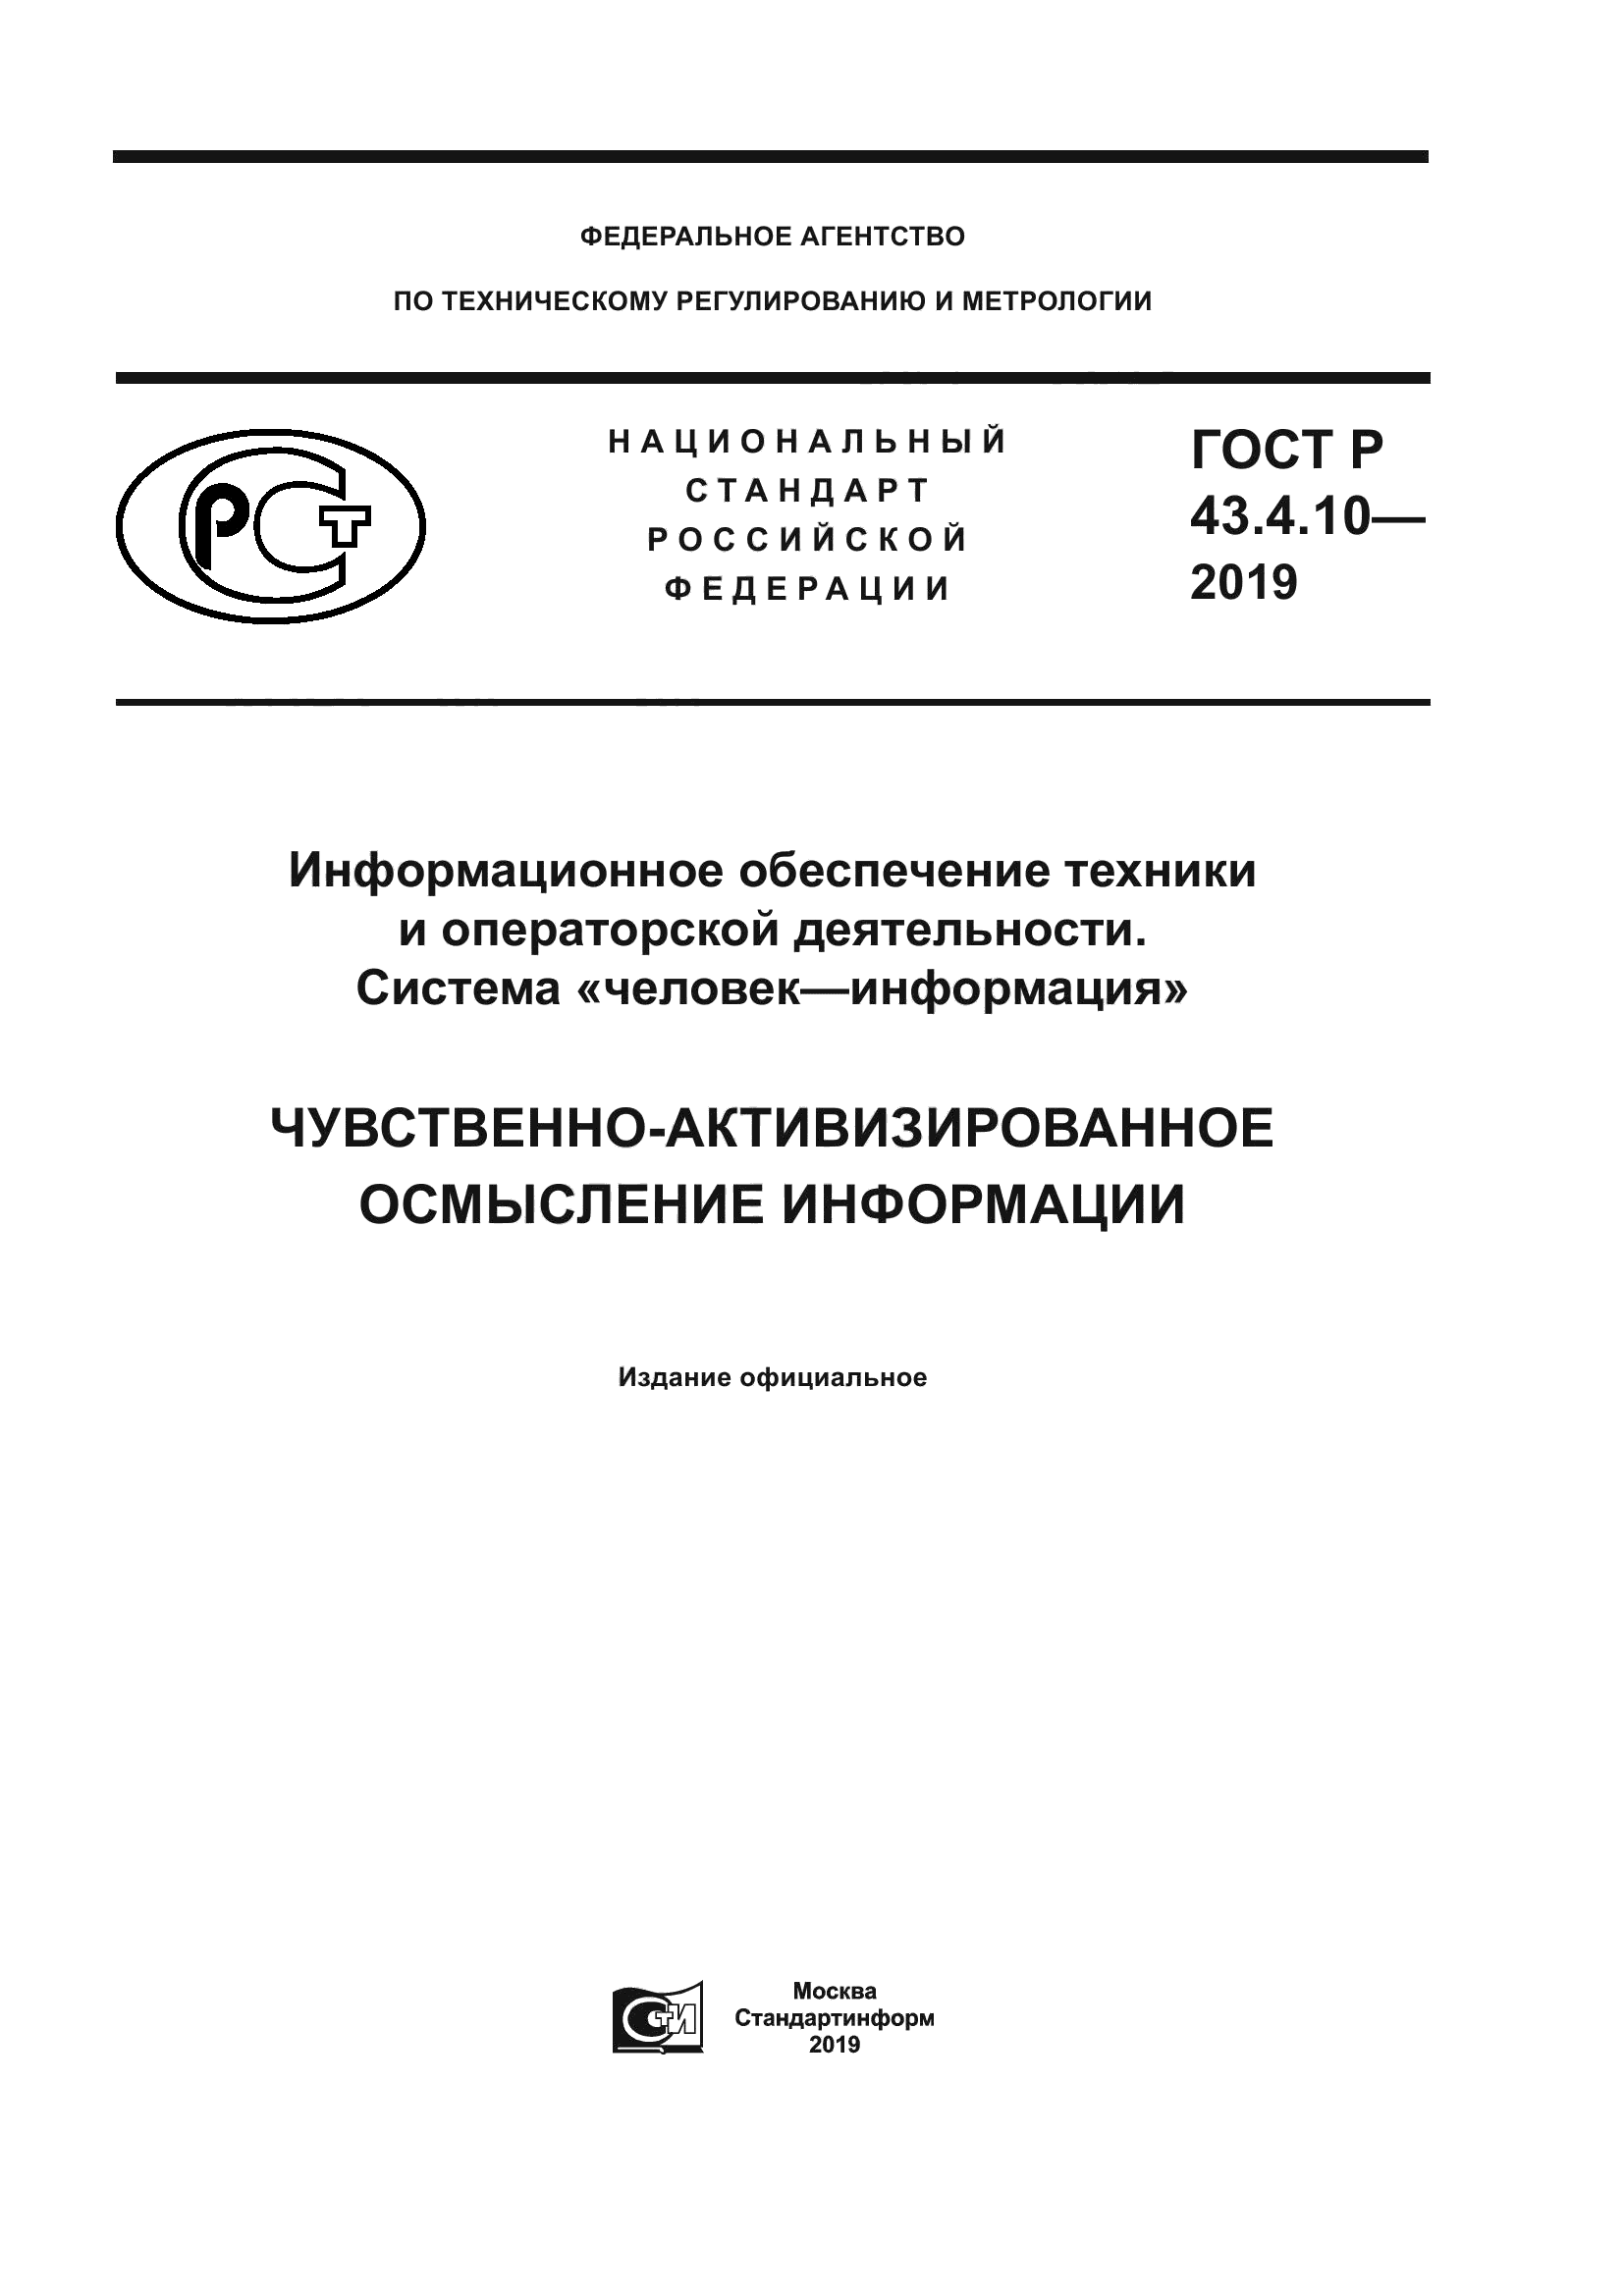 ГОСТ Р 43.4.10-2019